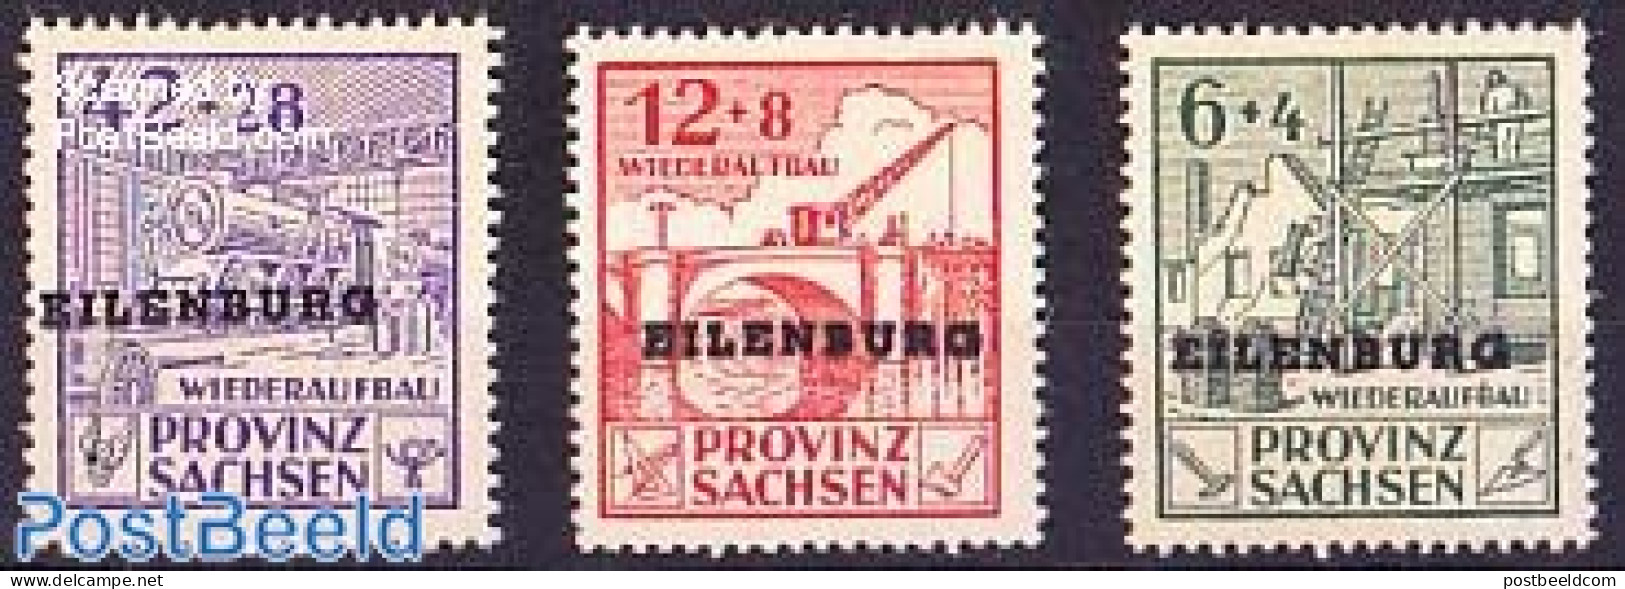 Germany, Local Post 1946 Eilenburg, Private Issue 3v, Horizontal Overprint, Mint NH, Transport - Railways - Trains